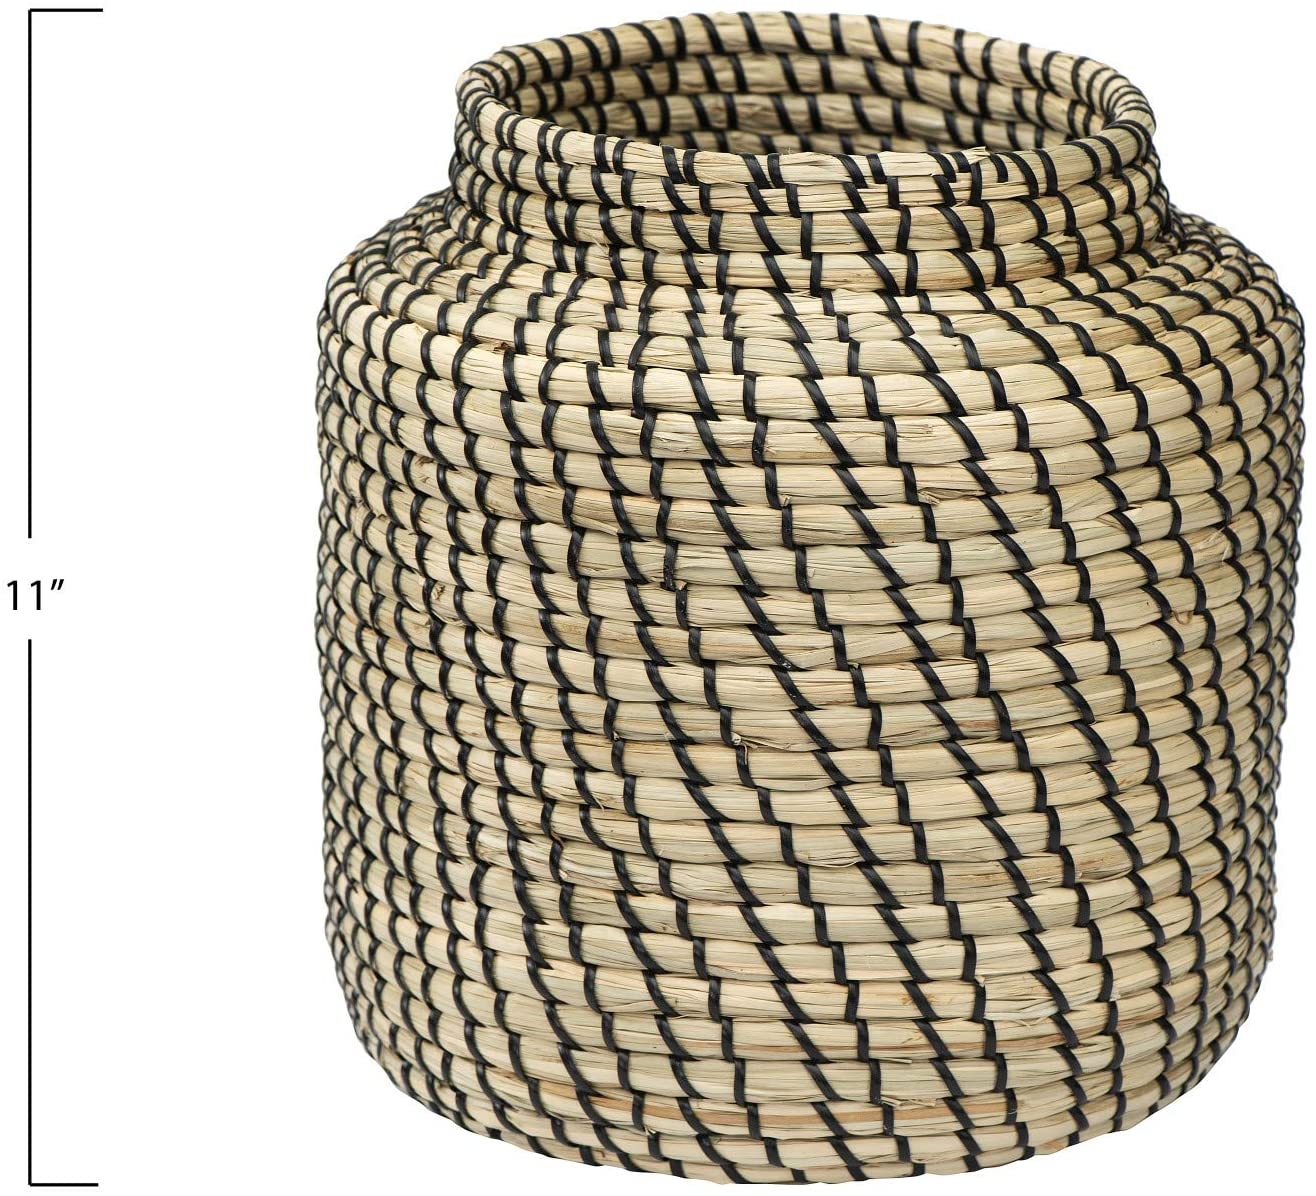 Handwoven Seagrass Basket - Image 1